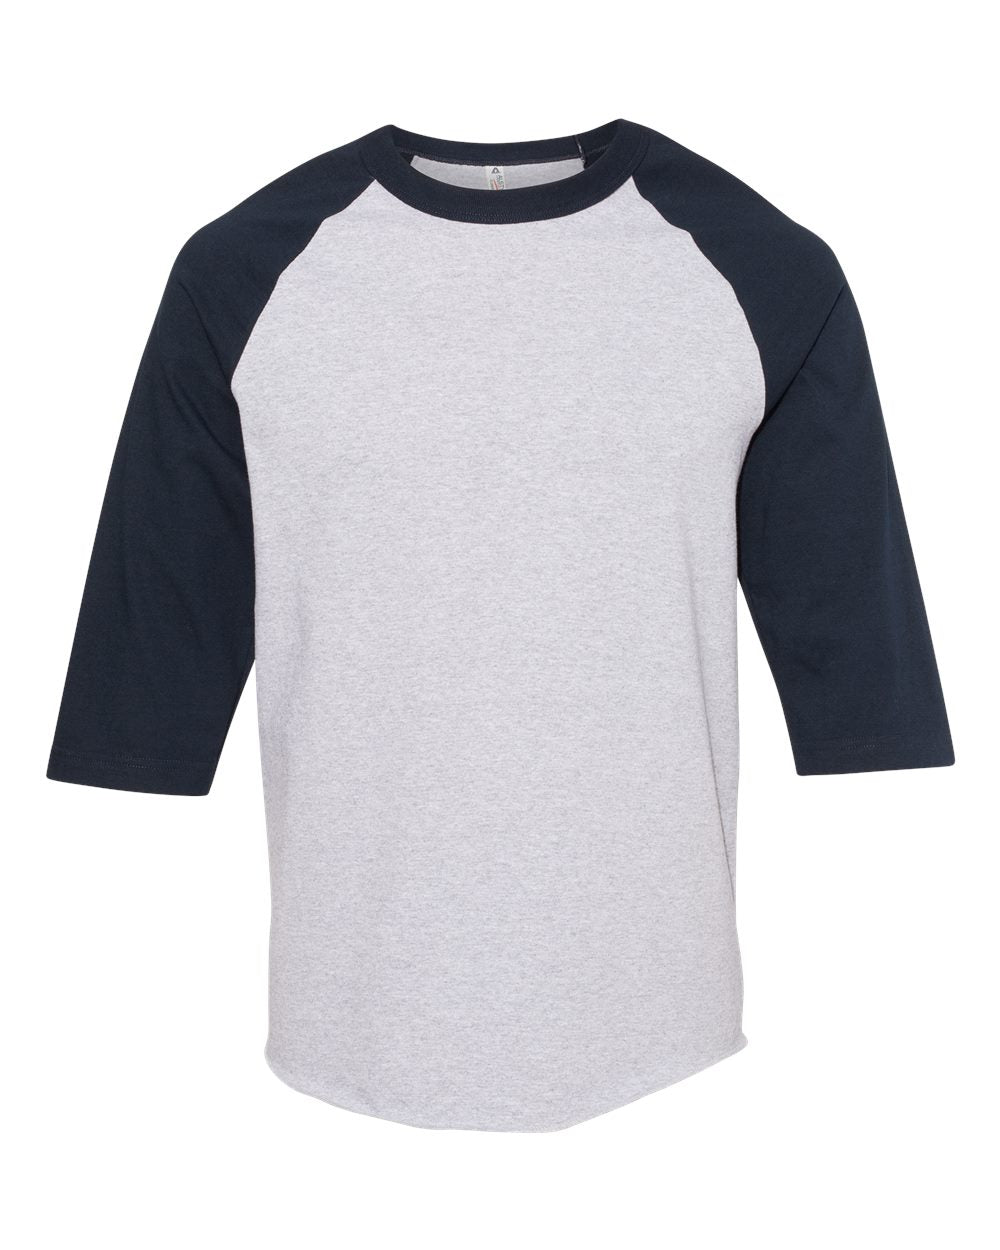 ALSTYLE - Classic Raglan Three-Quarter Sleeve T-Shirt - 1334